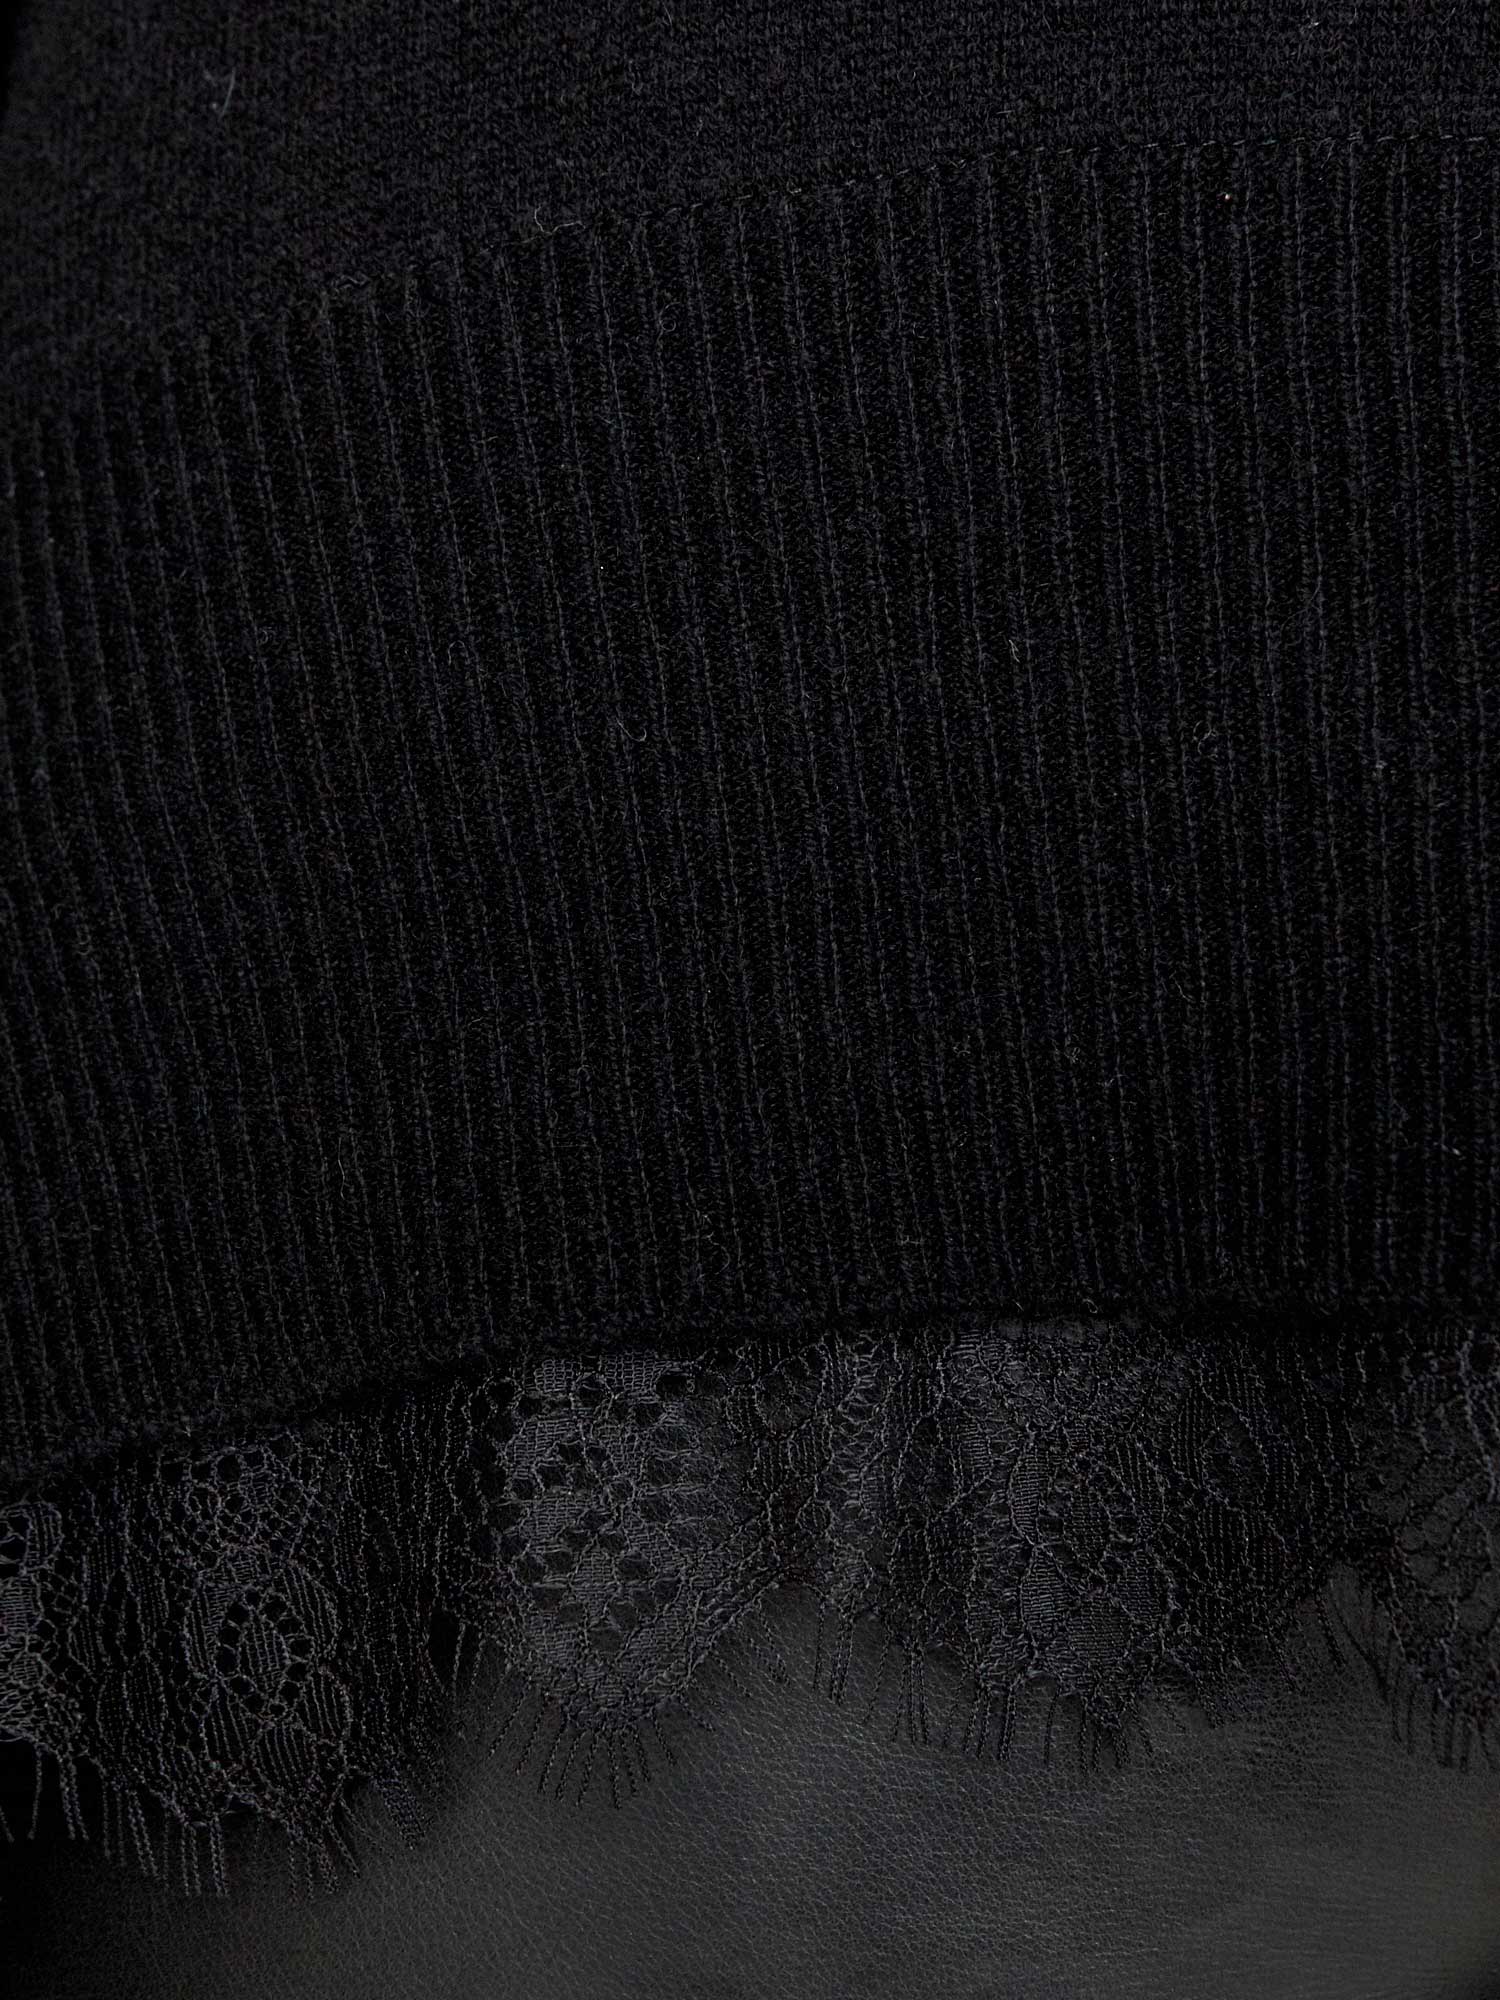 Black lace layered v-neck sweater close up 2